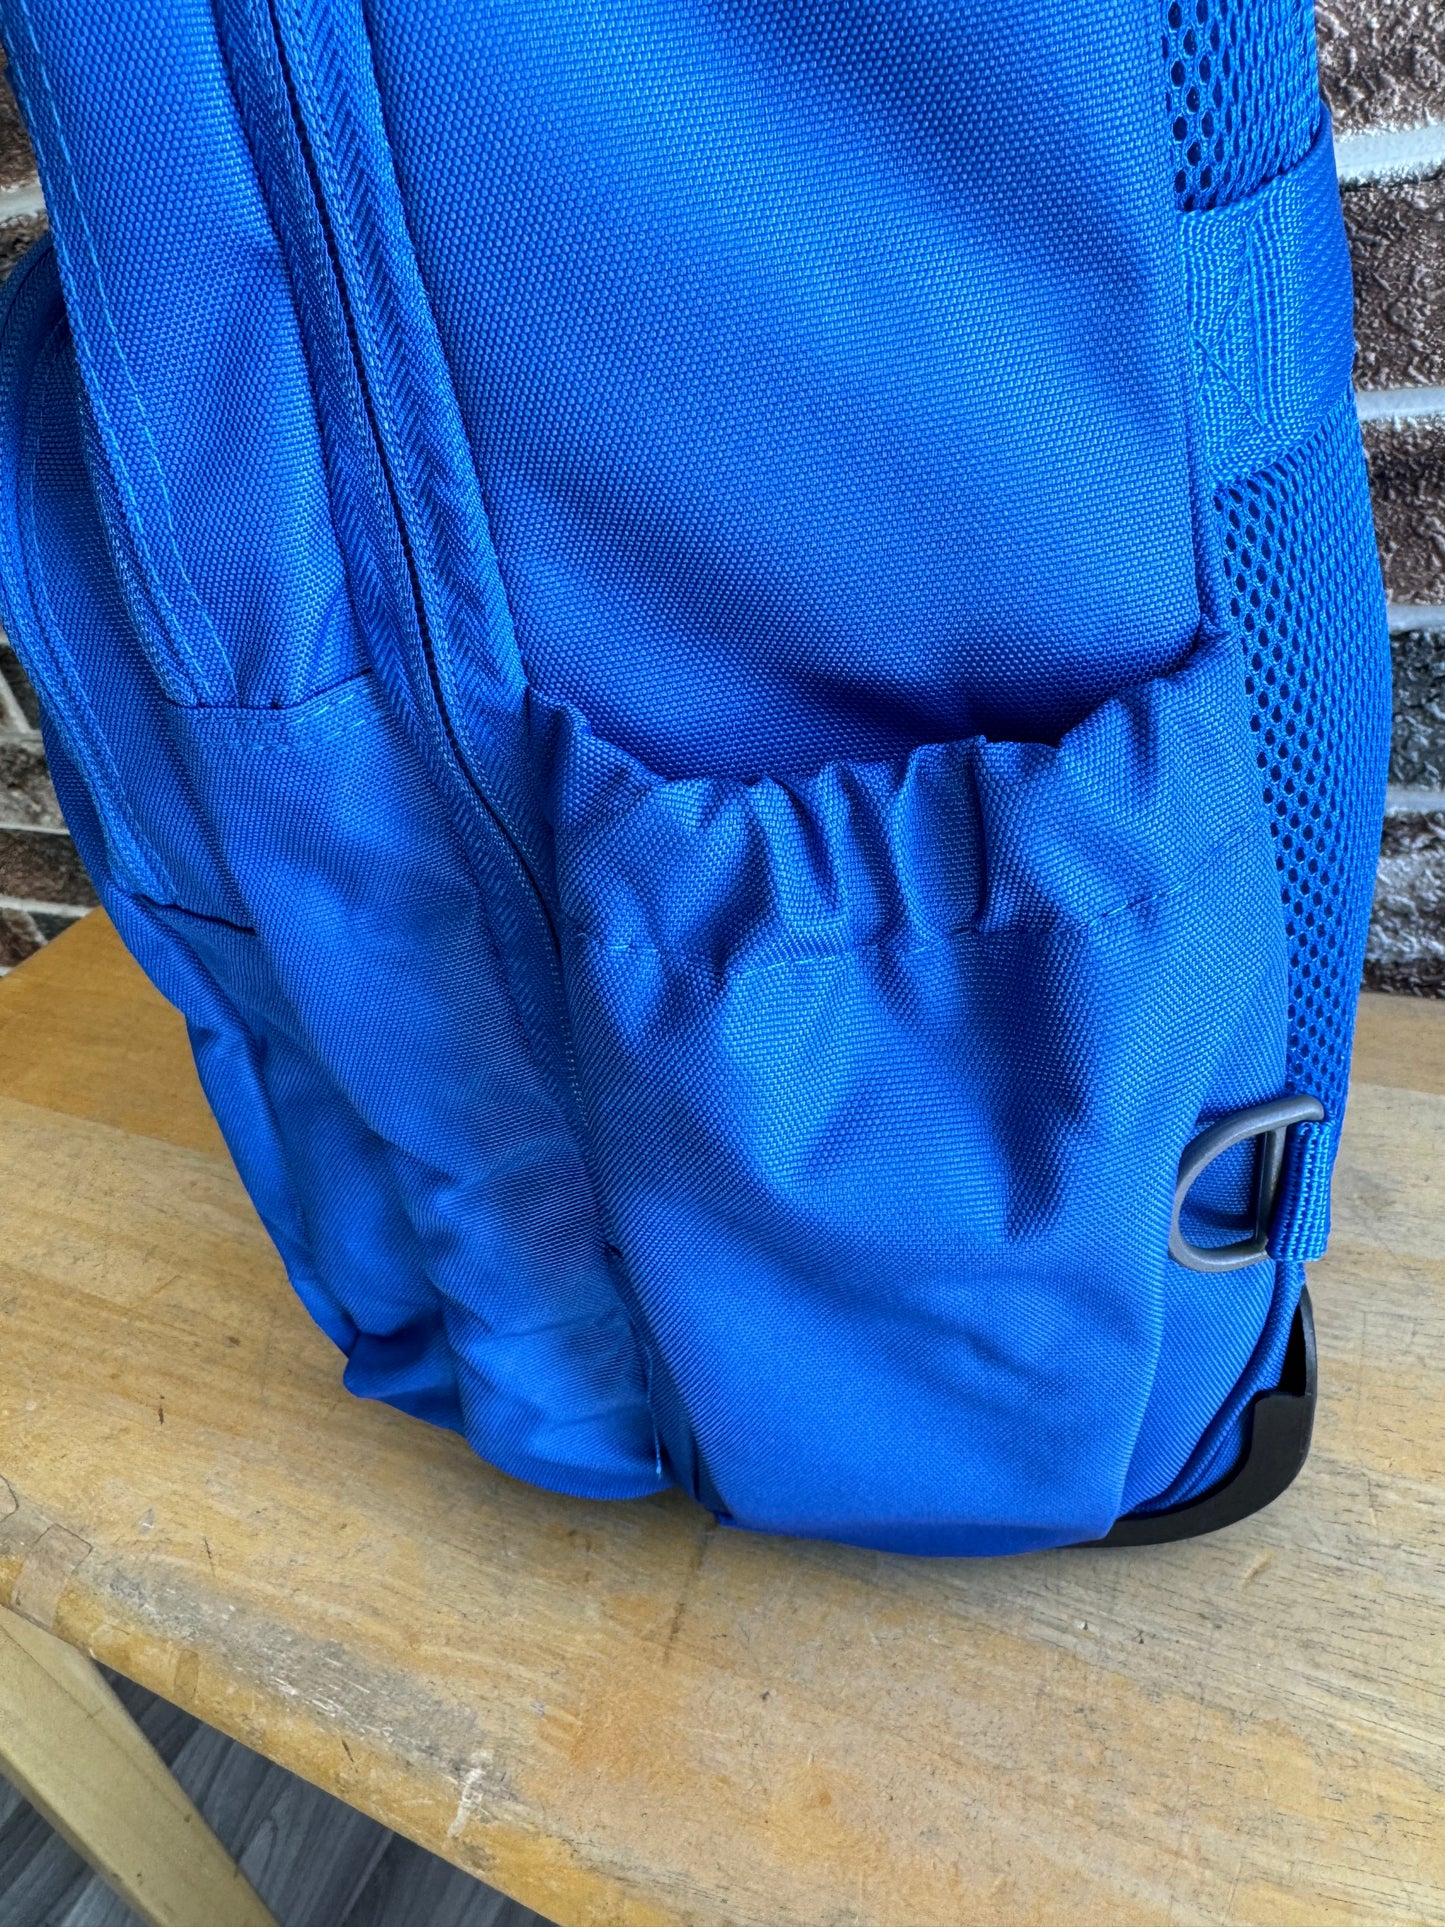 LiteGear- 2-Wheeled Backpack Mobile Pro